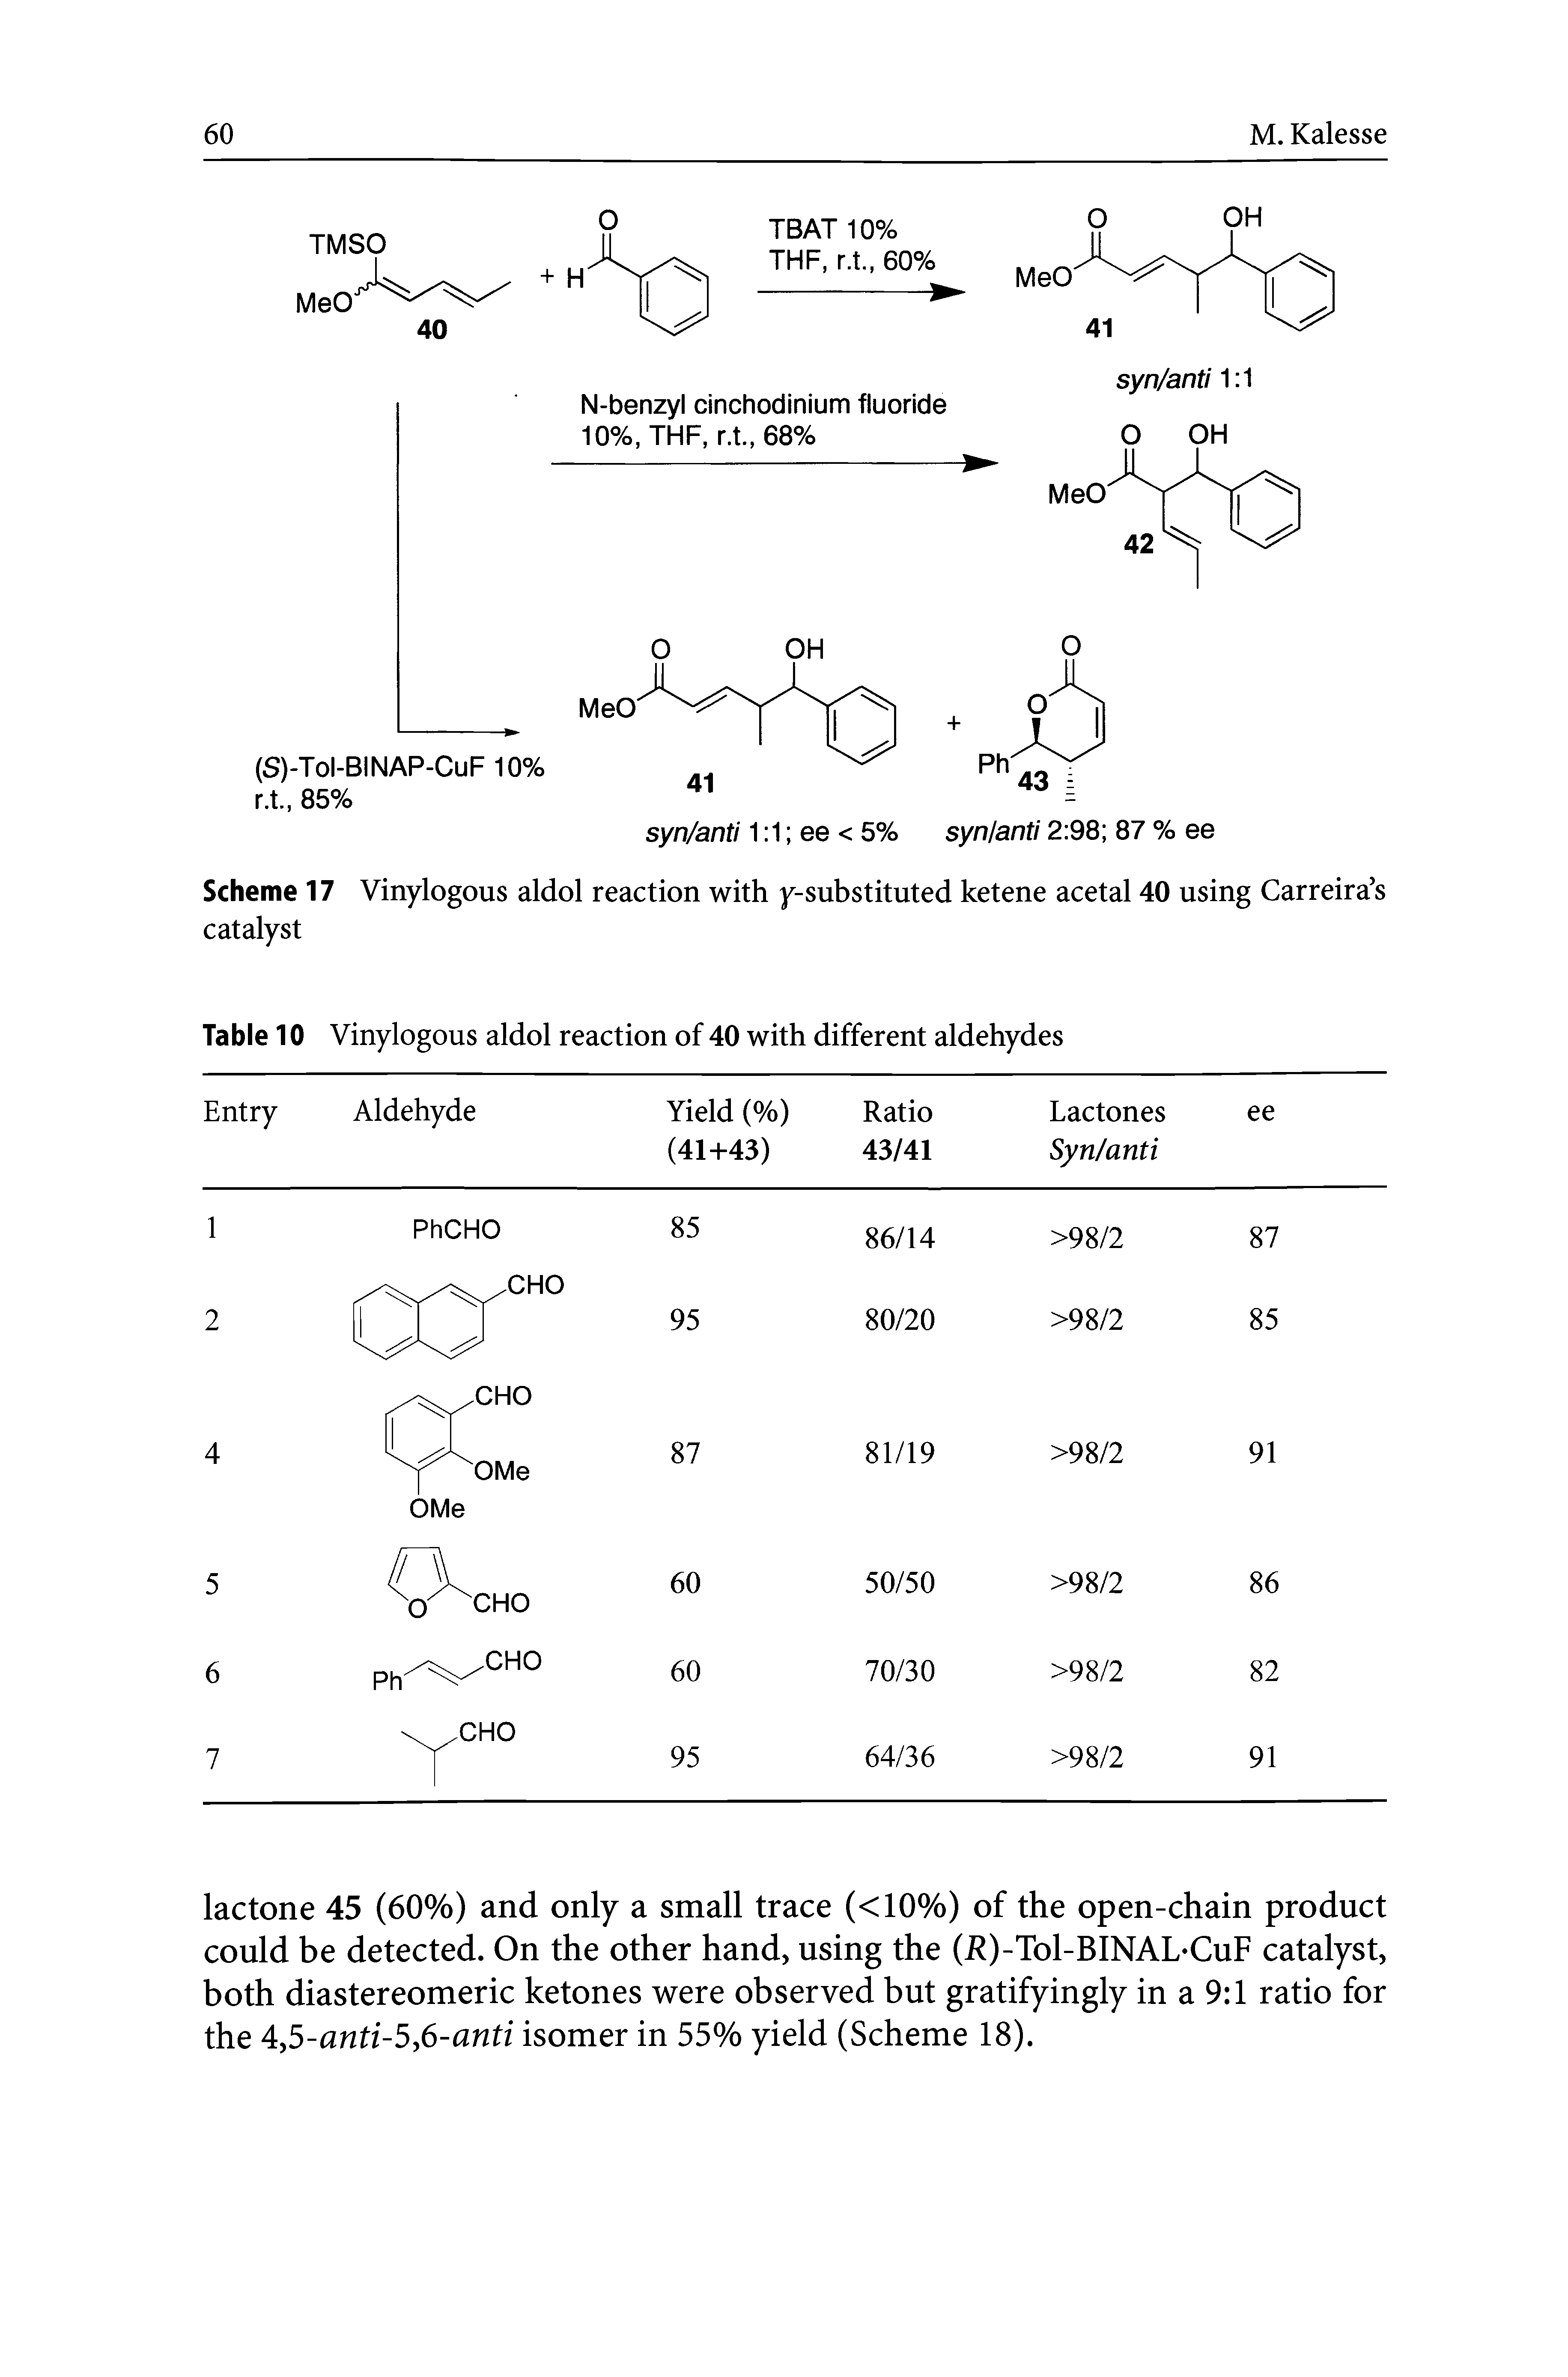 Table 10 Vinylogous aldol reaction of 40 with different aldehydes...